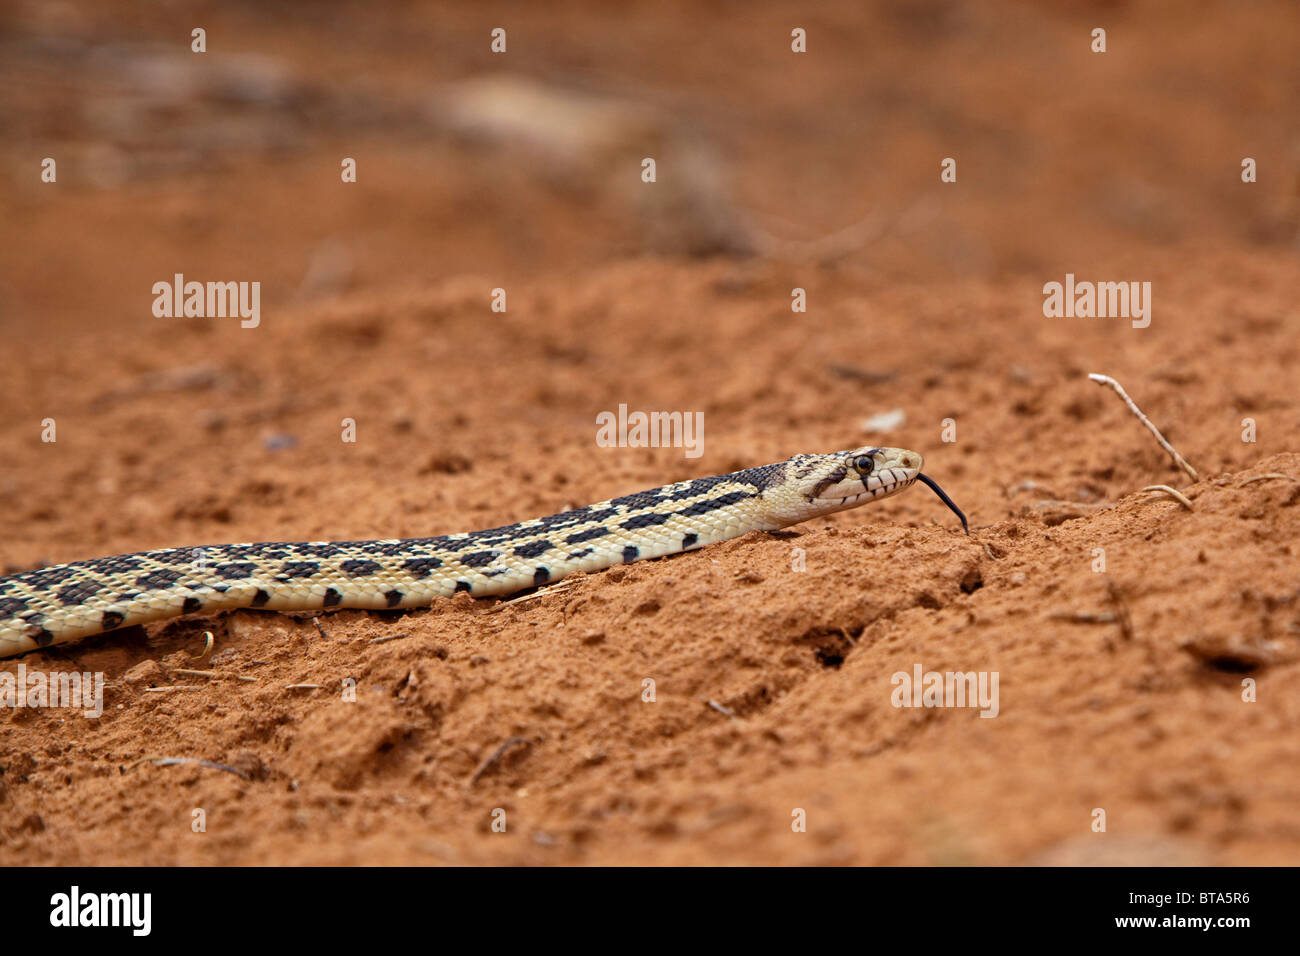 Great Basin gopher snake (Pituophis catenifer deserticola), USA, America Stock Photo